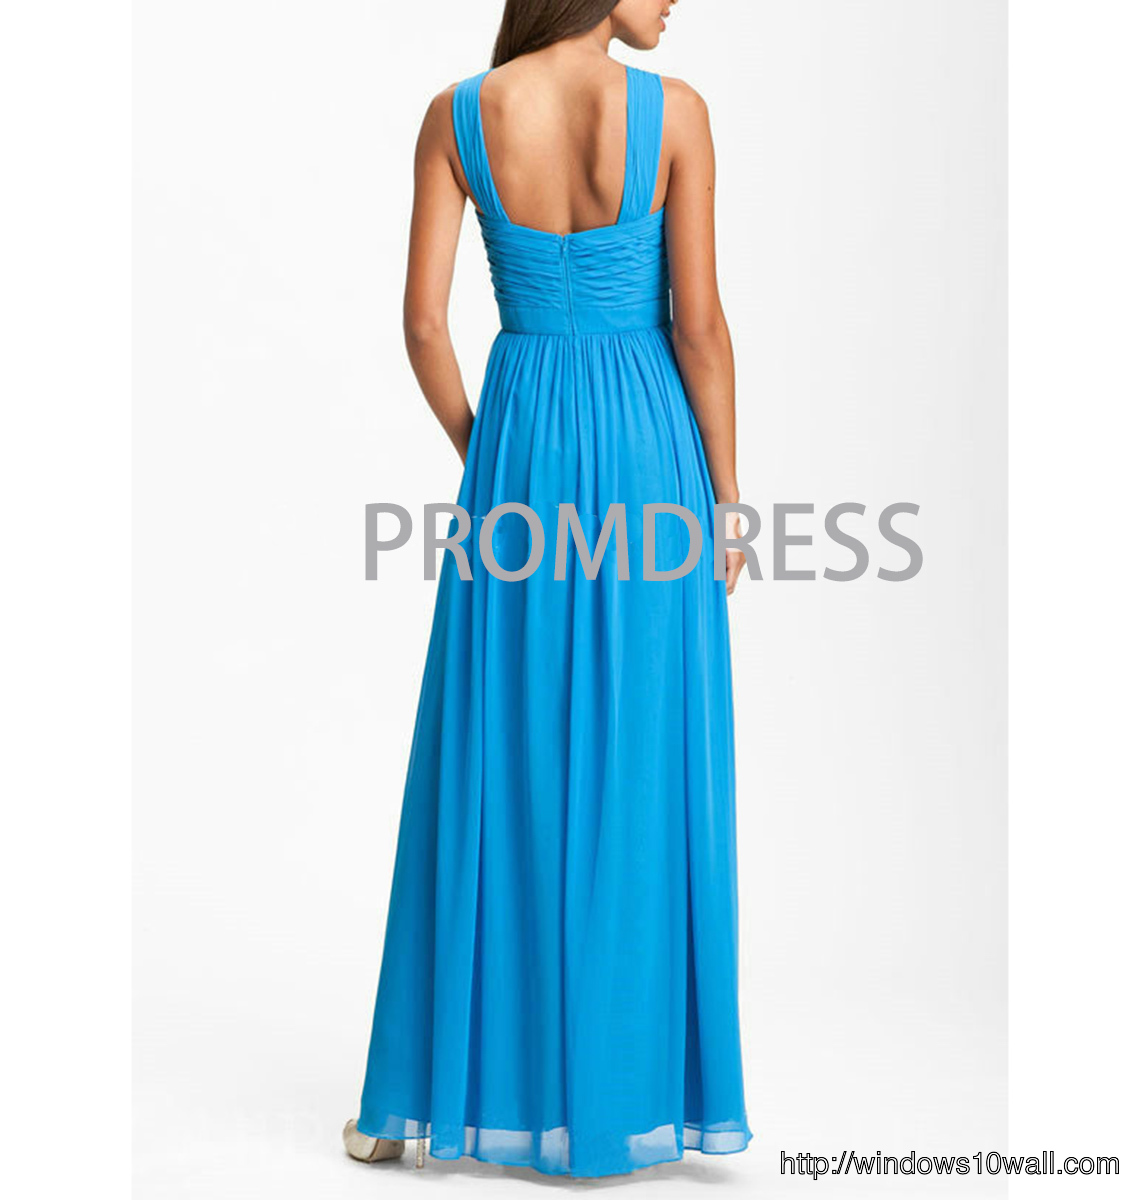 chiffon-sleeveless-prom-dress-aqua-blue-background-wallpaper